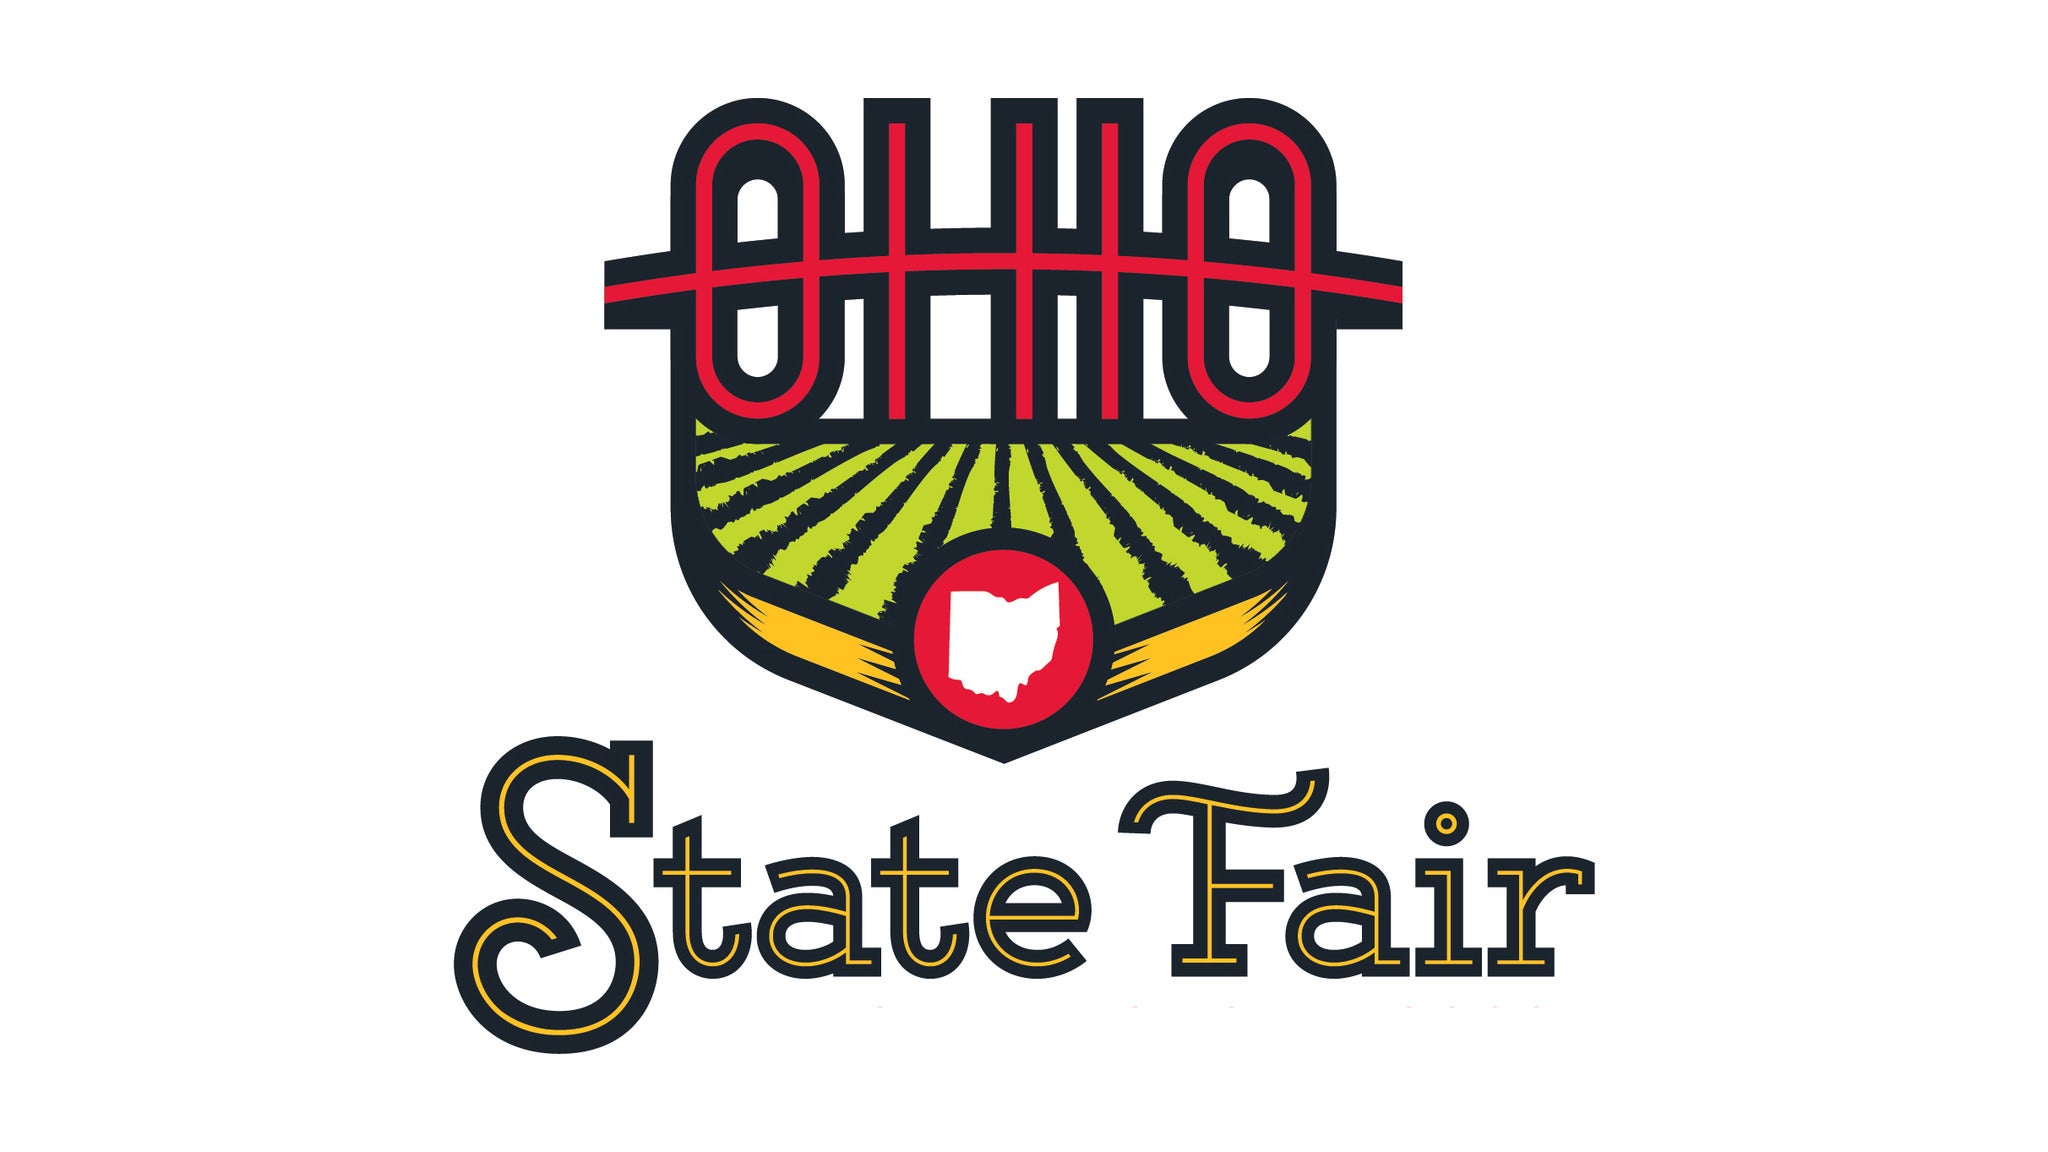 Ohio State Fair Advance Admission in Columbus promo photo for Advance presale offer code